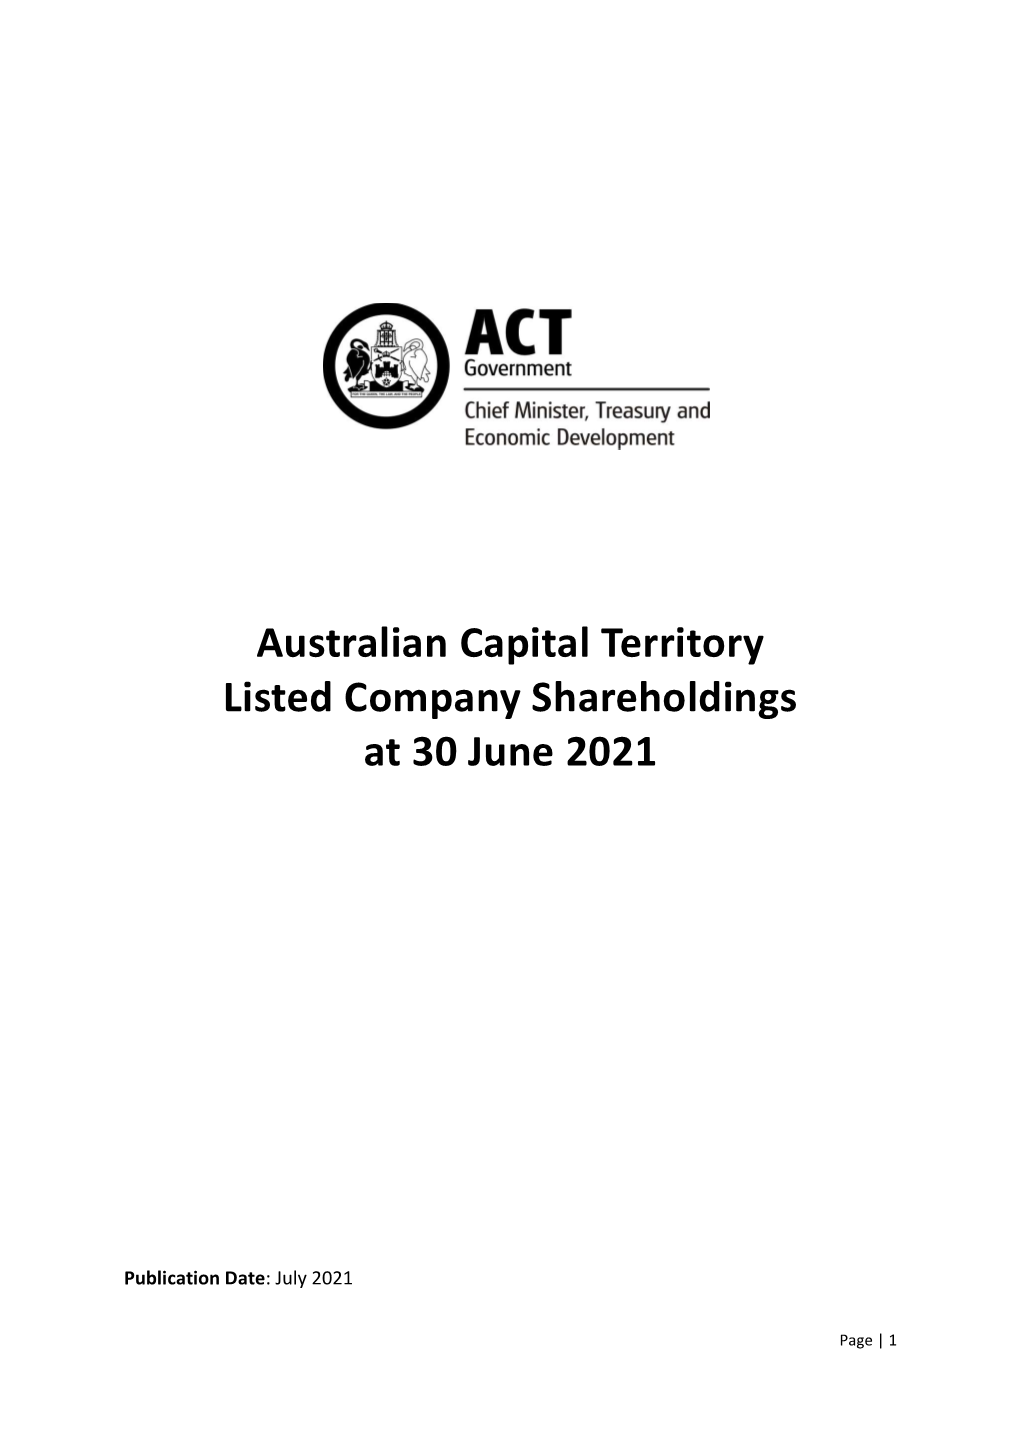 Australian Capital Territory Listed Company Shareholdings at 30 June 2021